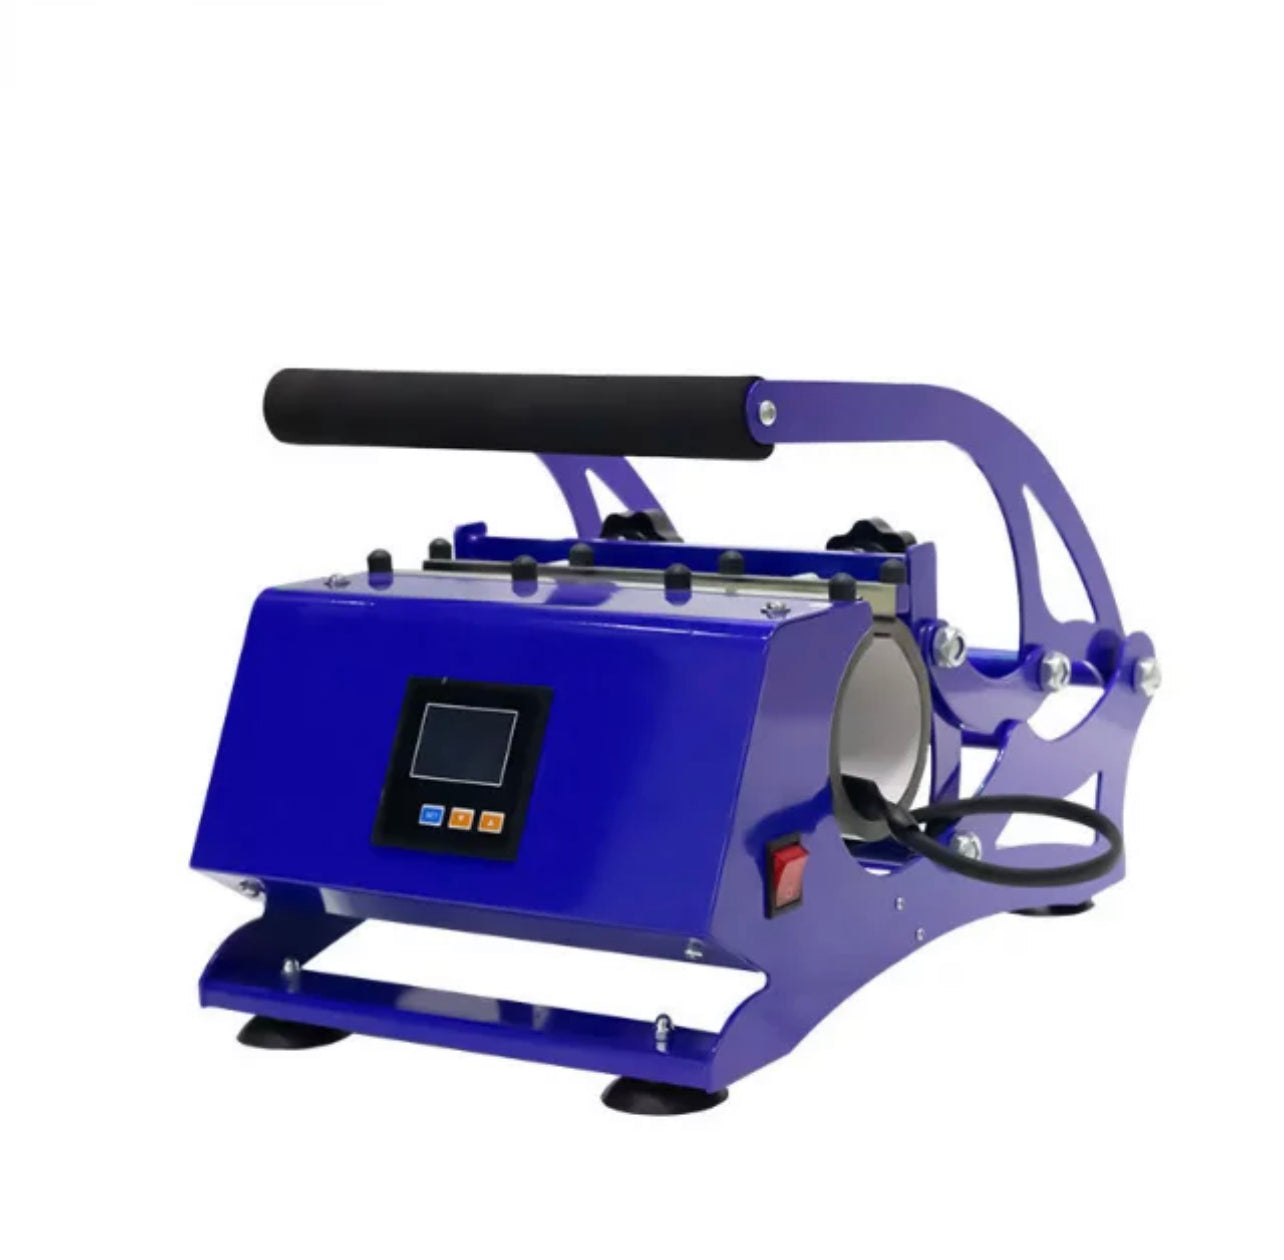 HTVRONT Auto Heat Press Machine - 15x15 Smart Heat Brazil